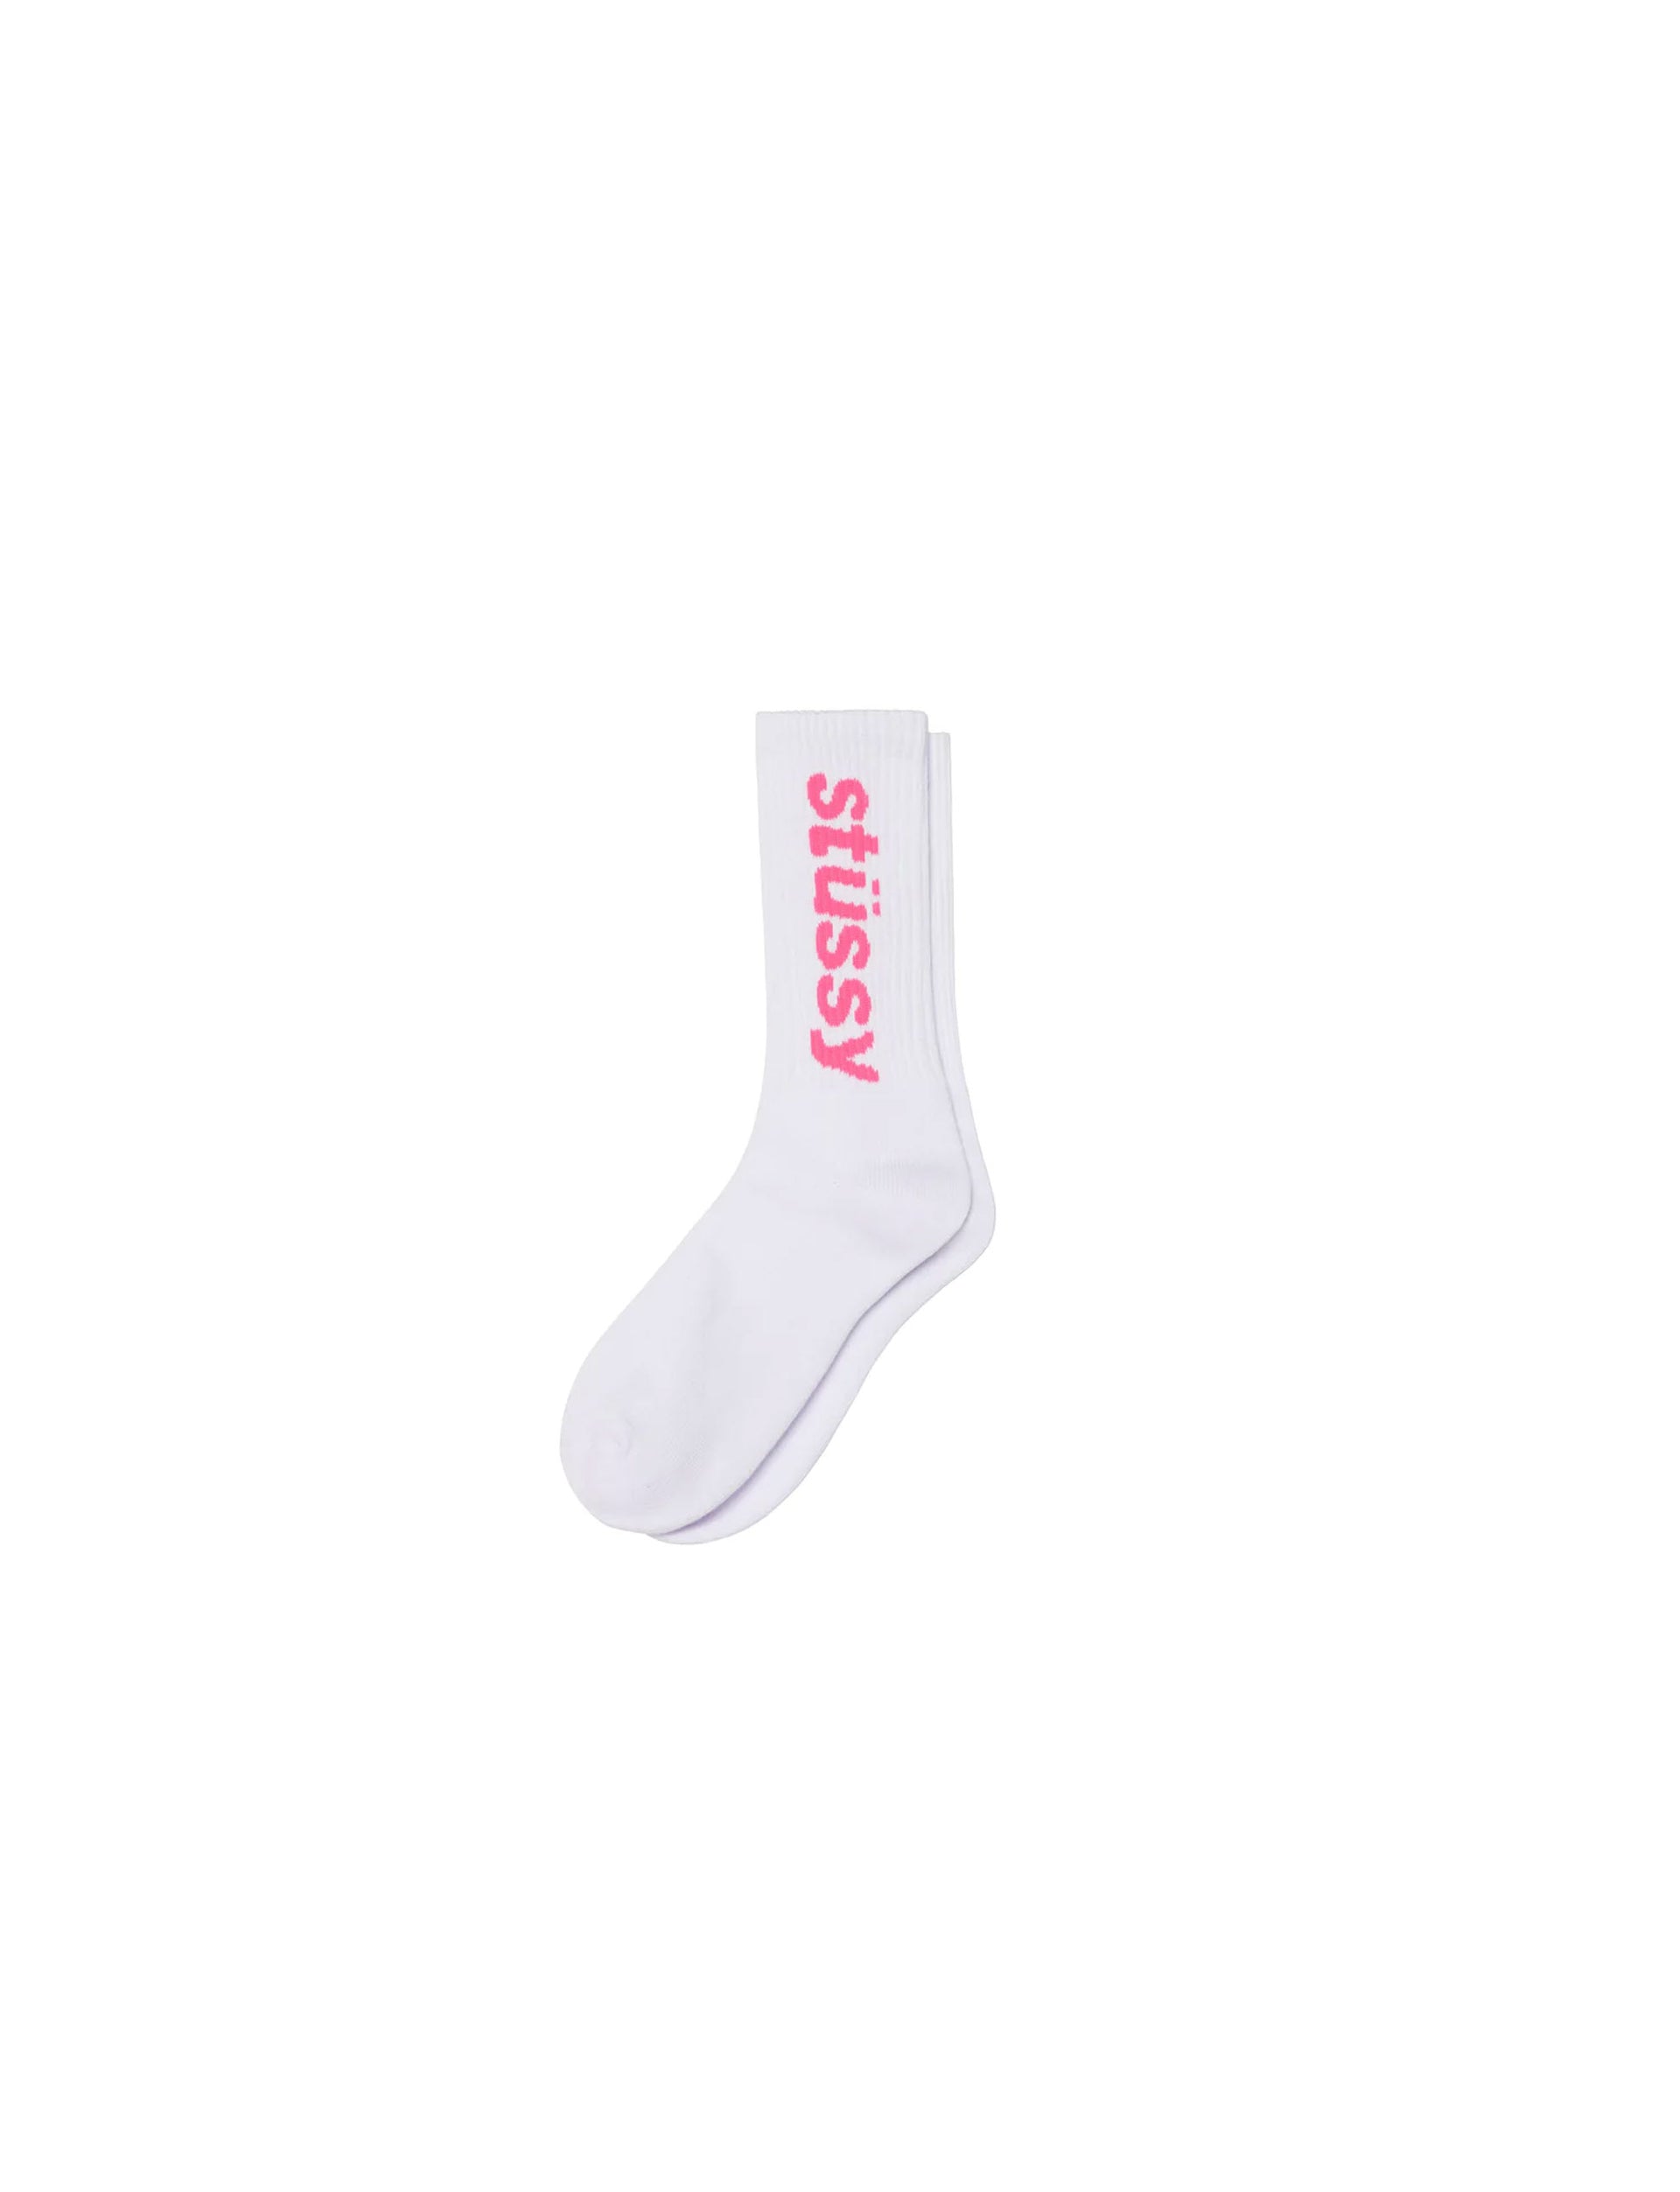 STÜSSY Helvetica Crew Socks WHITE/PINK